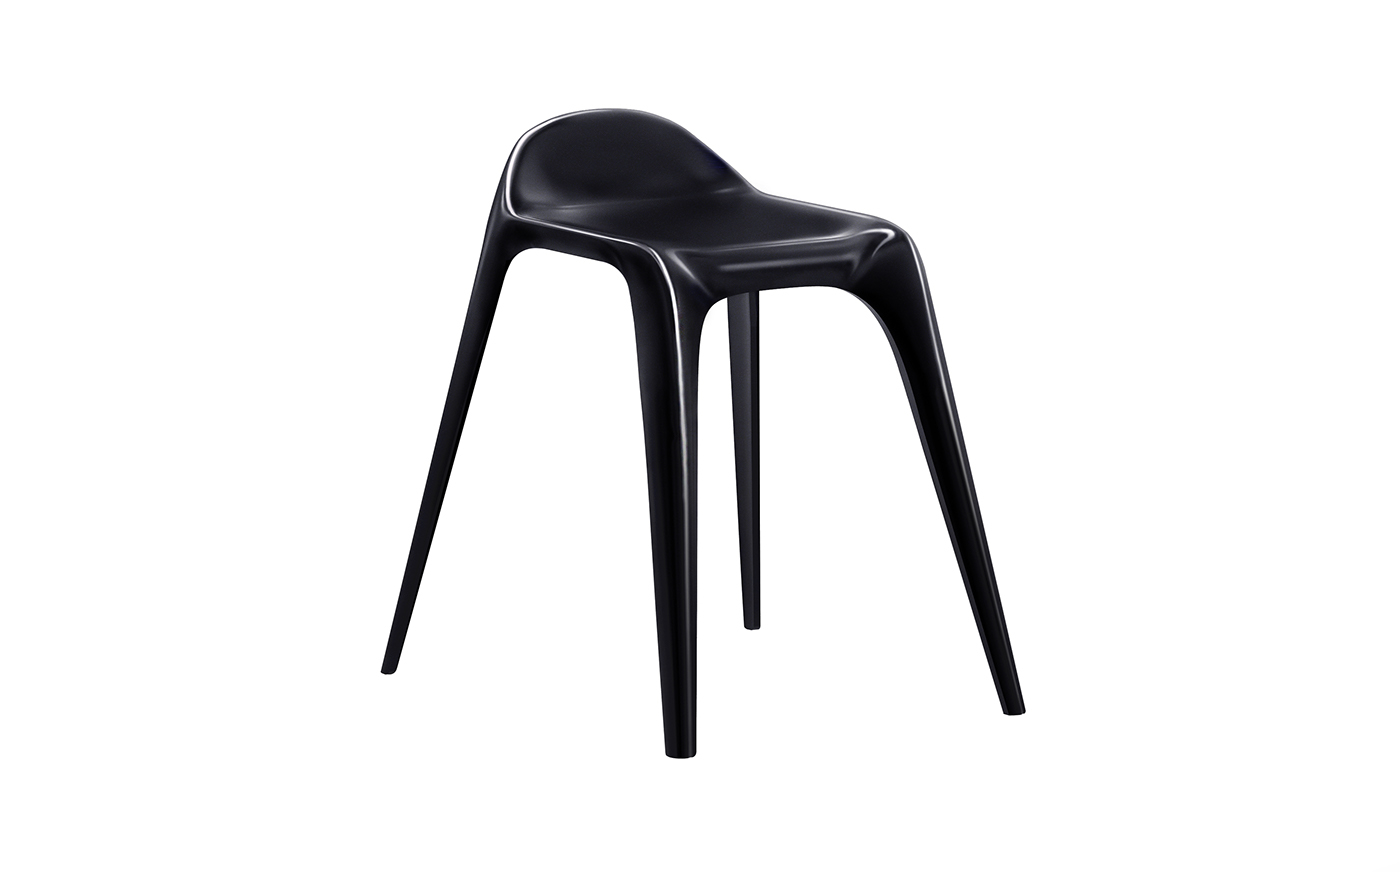 Porsche chair stool product furniture